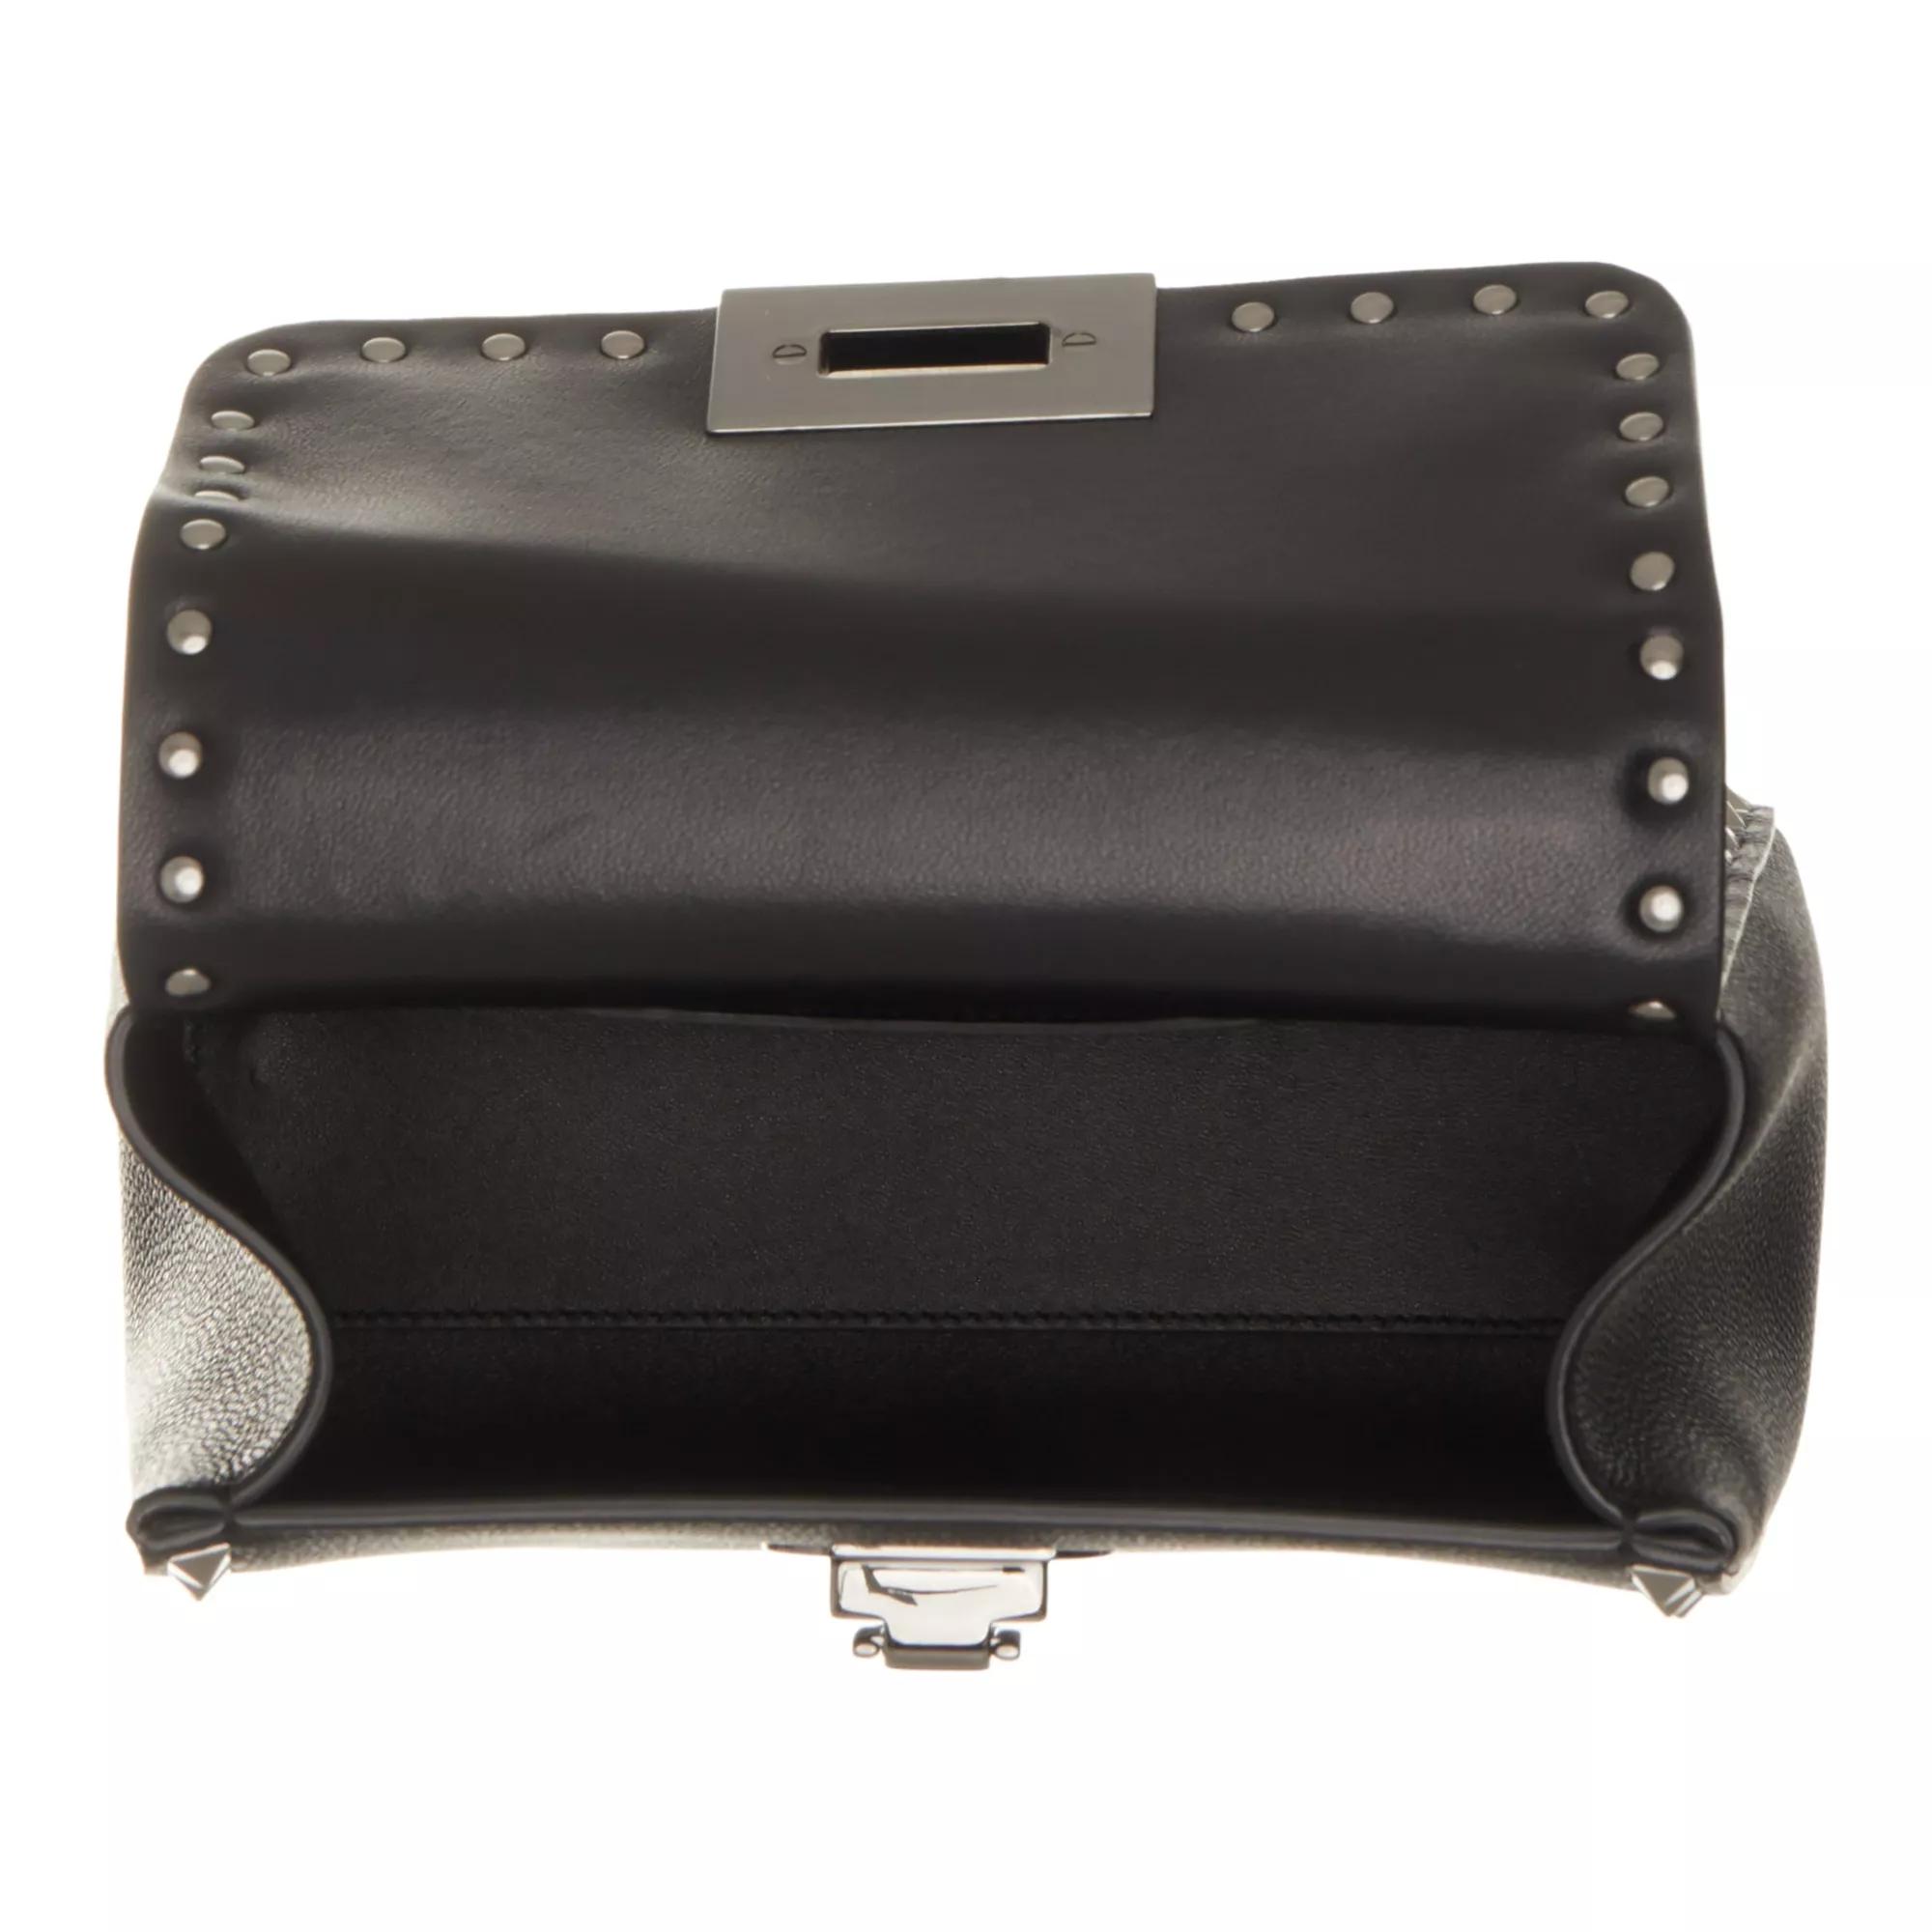 Valentino Garavani Shoppers Small Top Handle Bag in zwart